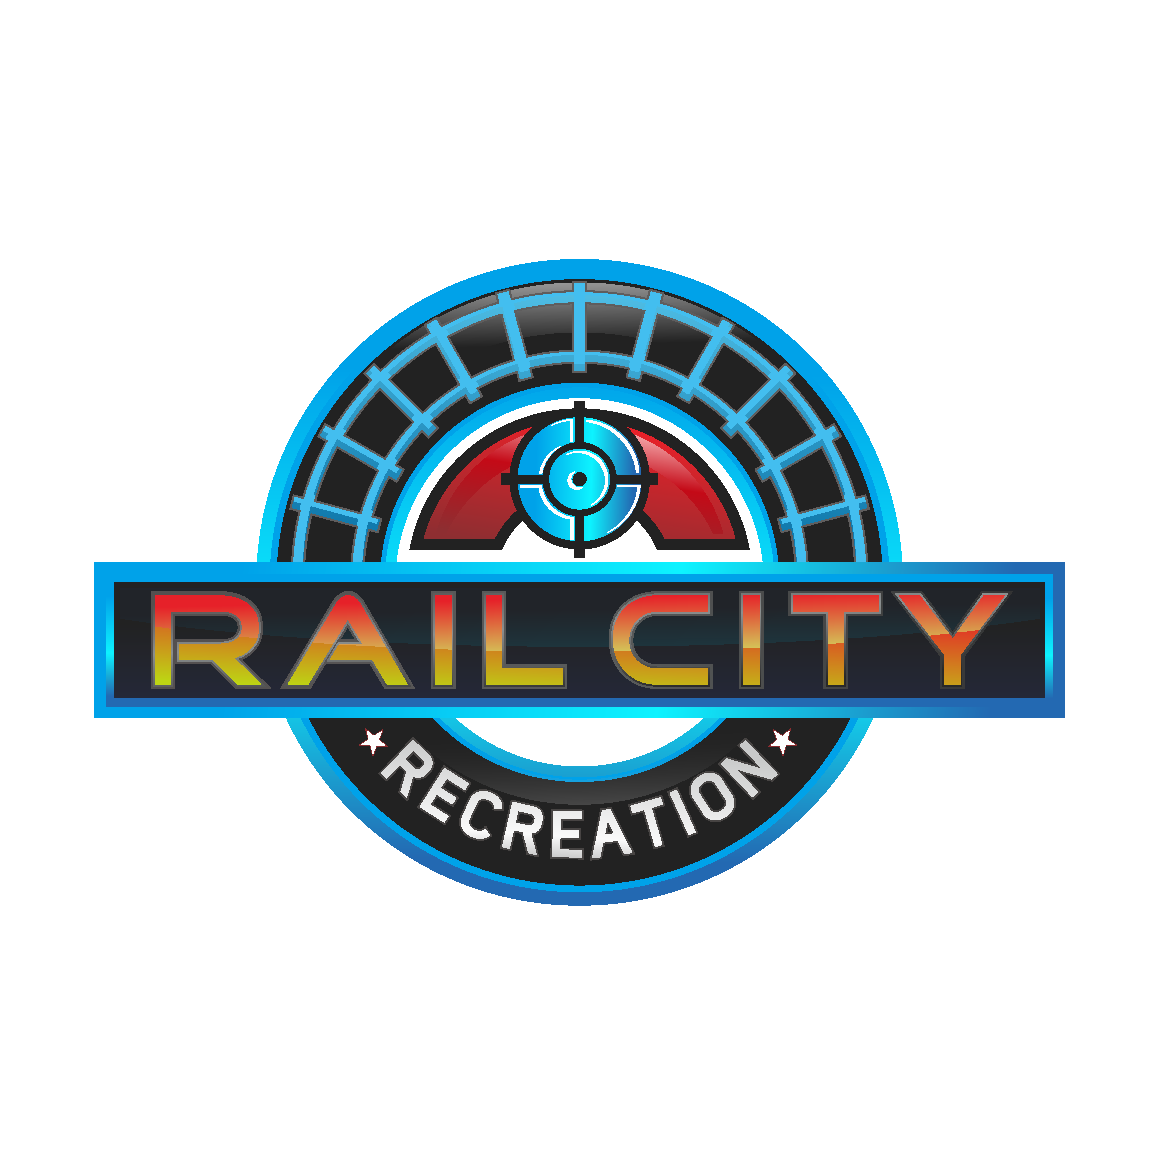 Rail City Recreation